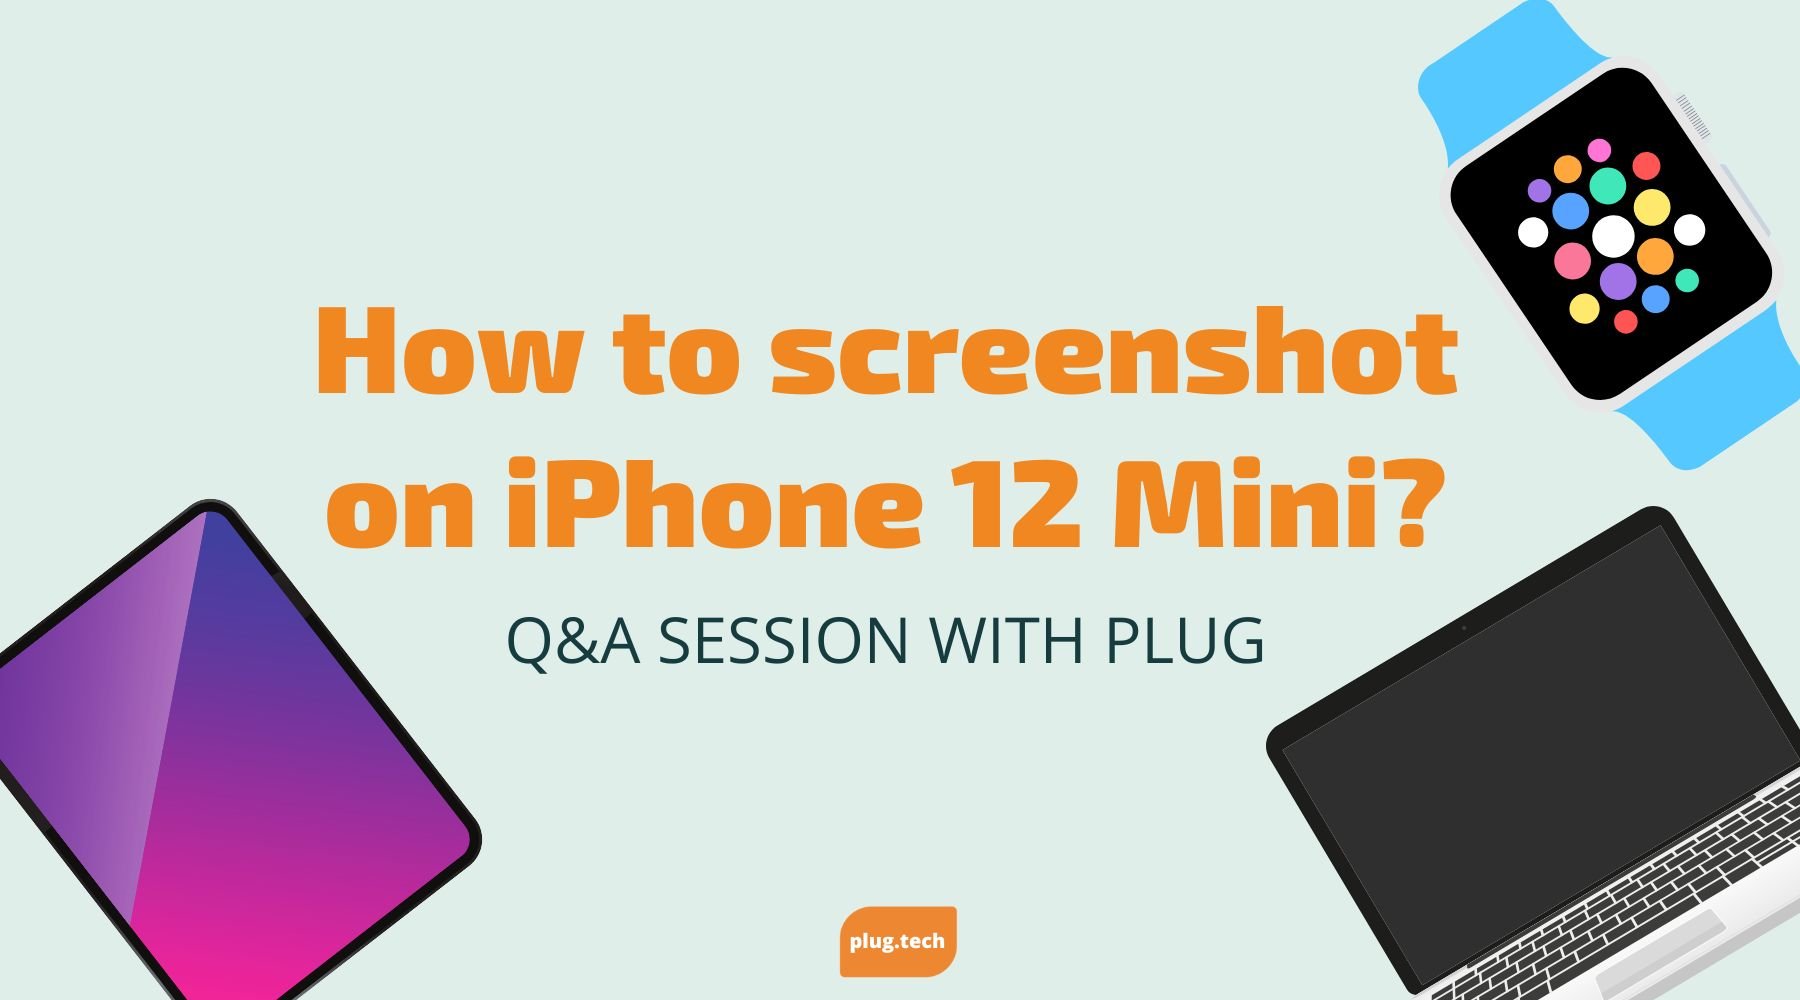 How to screenshot on iPhone 12 mini?